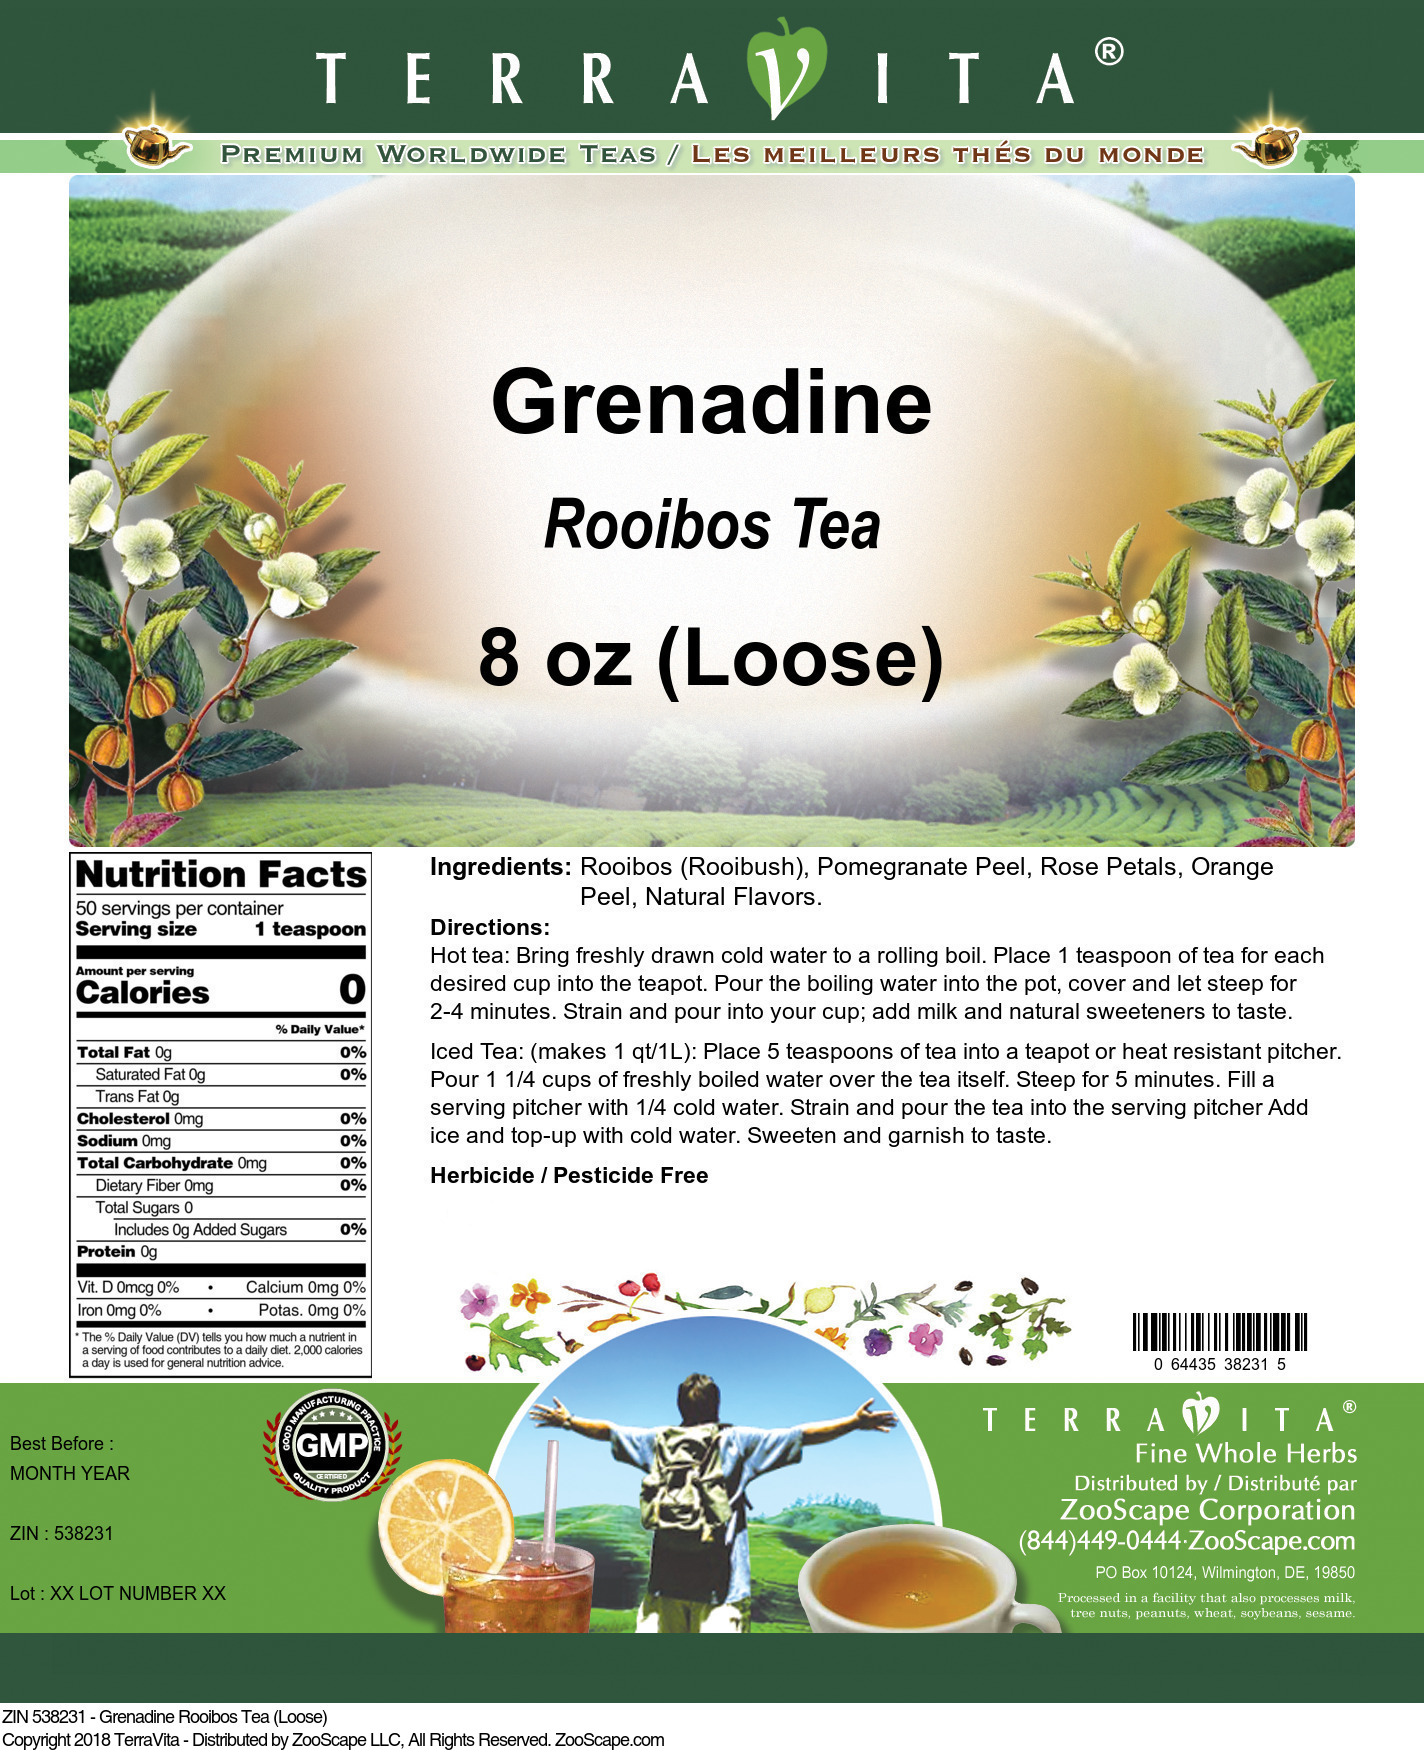 Grenadine Rooibos Tea (Loose) - Label